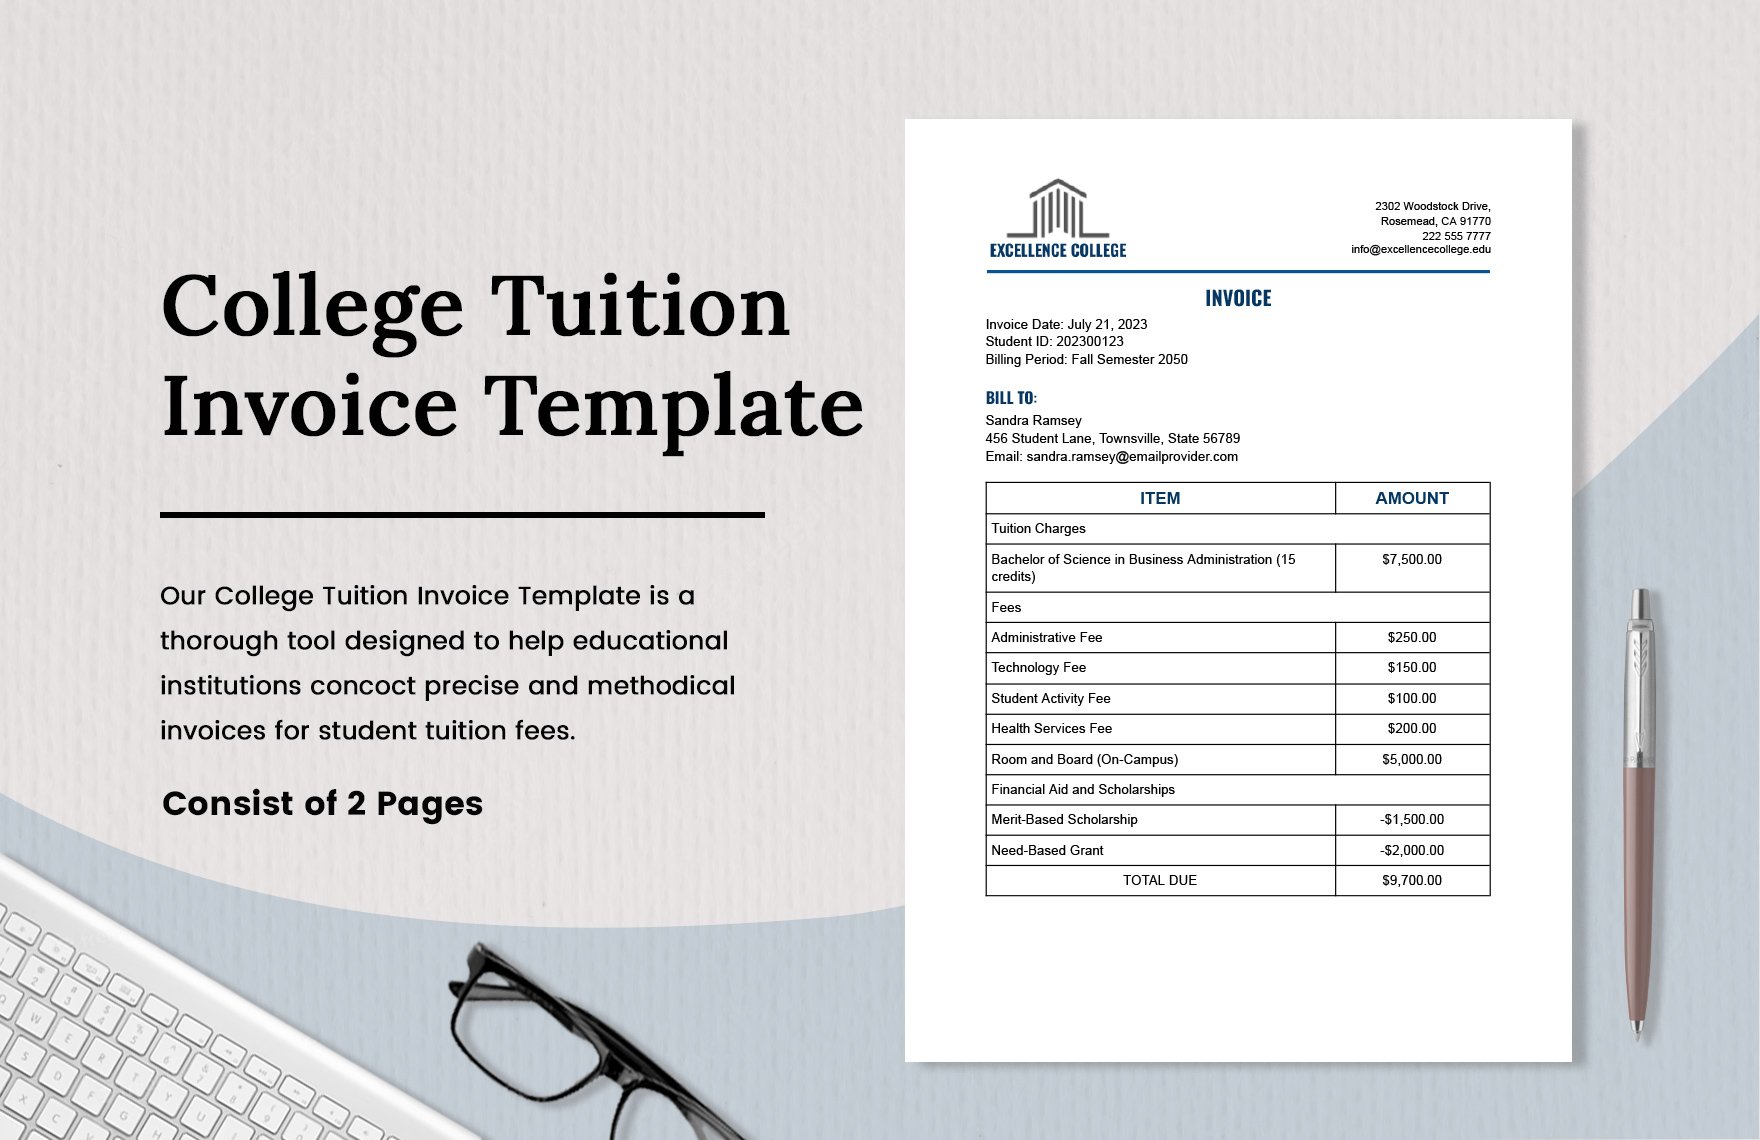 College Tuition Invoice Template